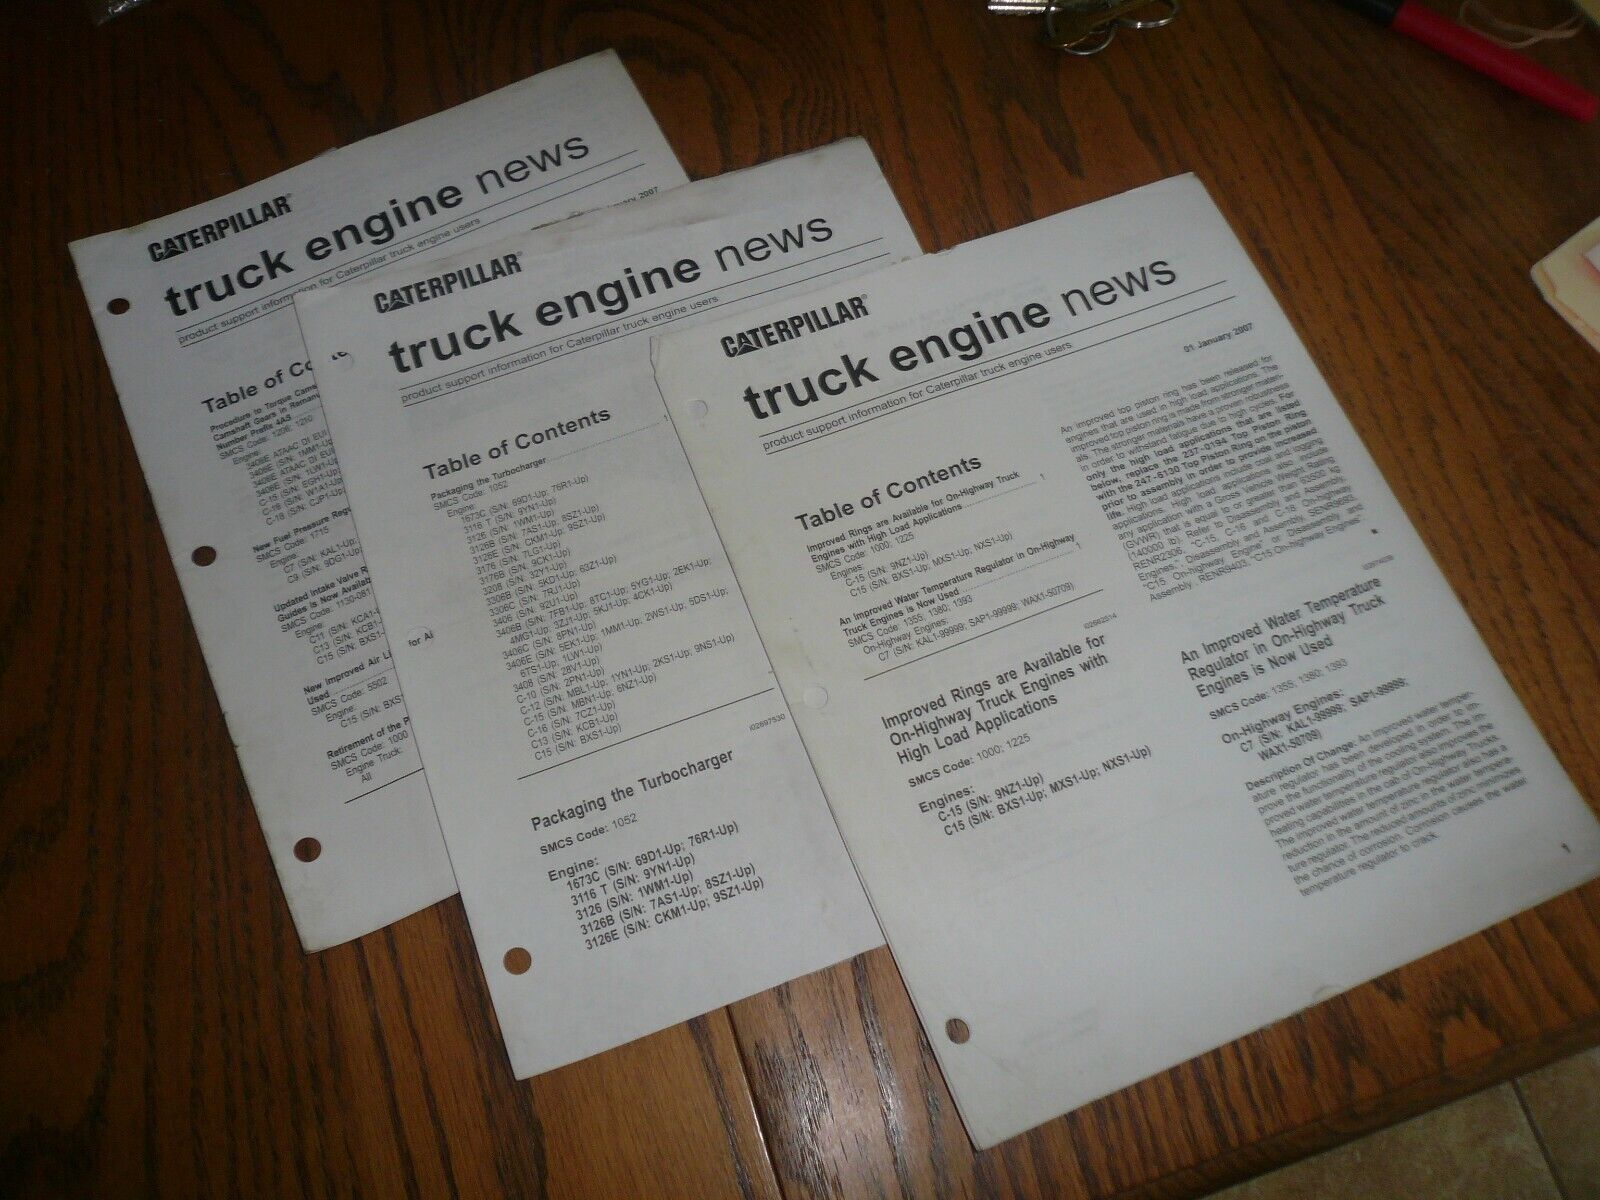 2007 Caterpillar Truck Engine News - Vintage - 3 Issues